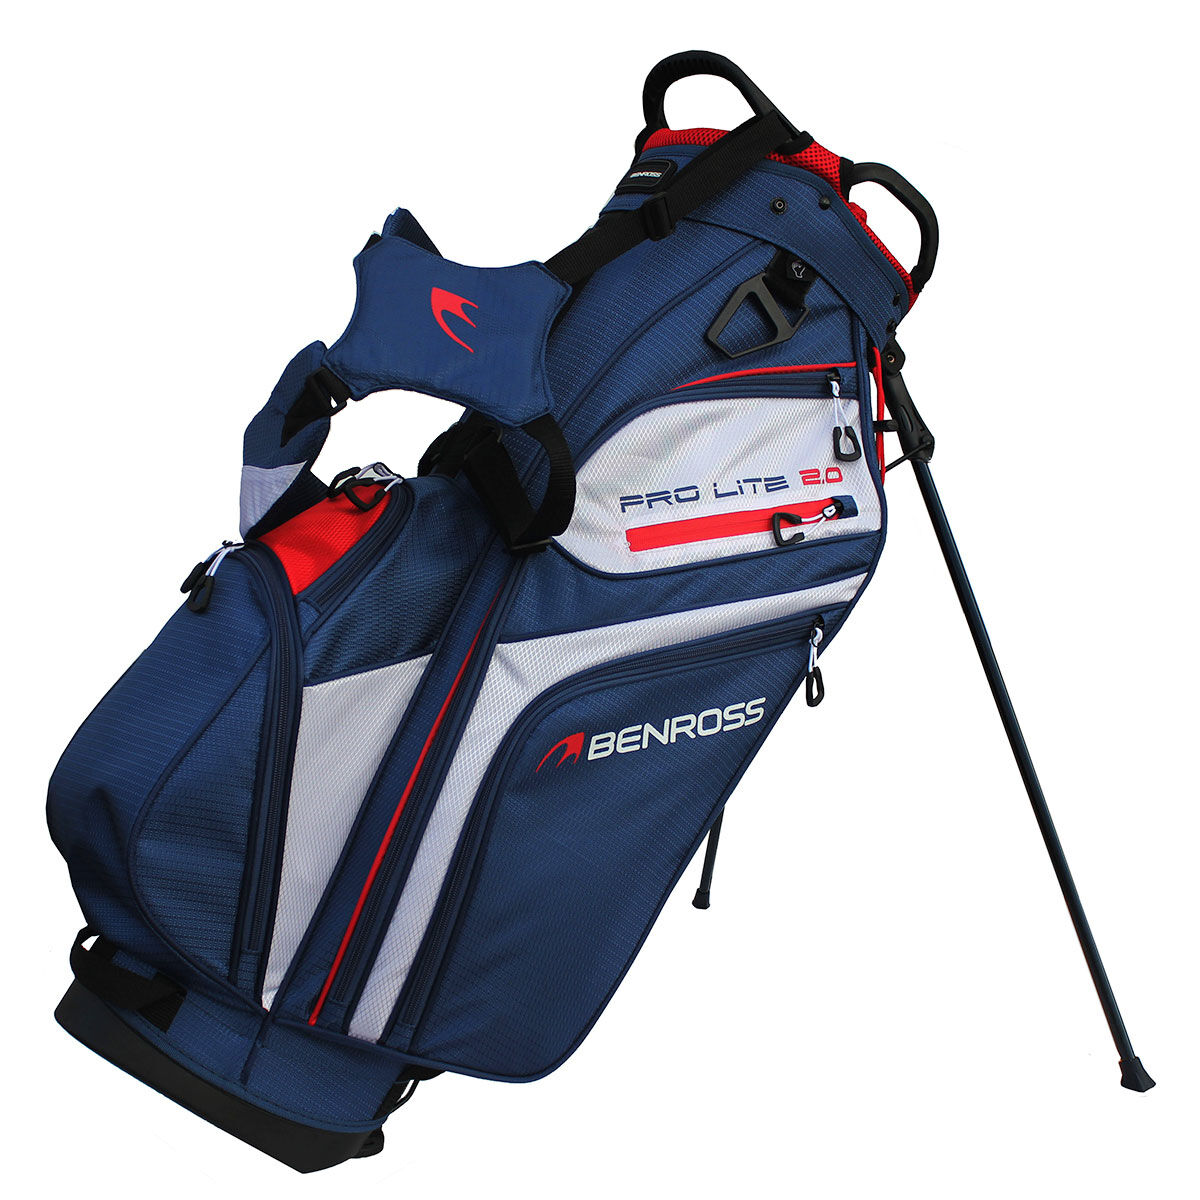 Benross Pro-Lite 2.0 Golf Stand Bag, Navy/white/red, One Size | American Golf von Benross